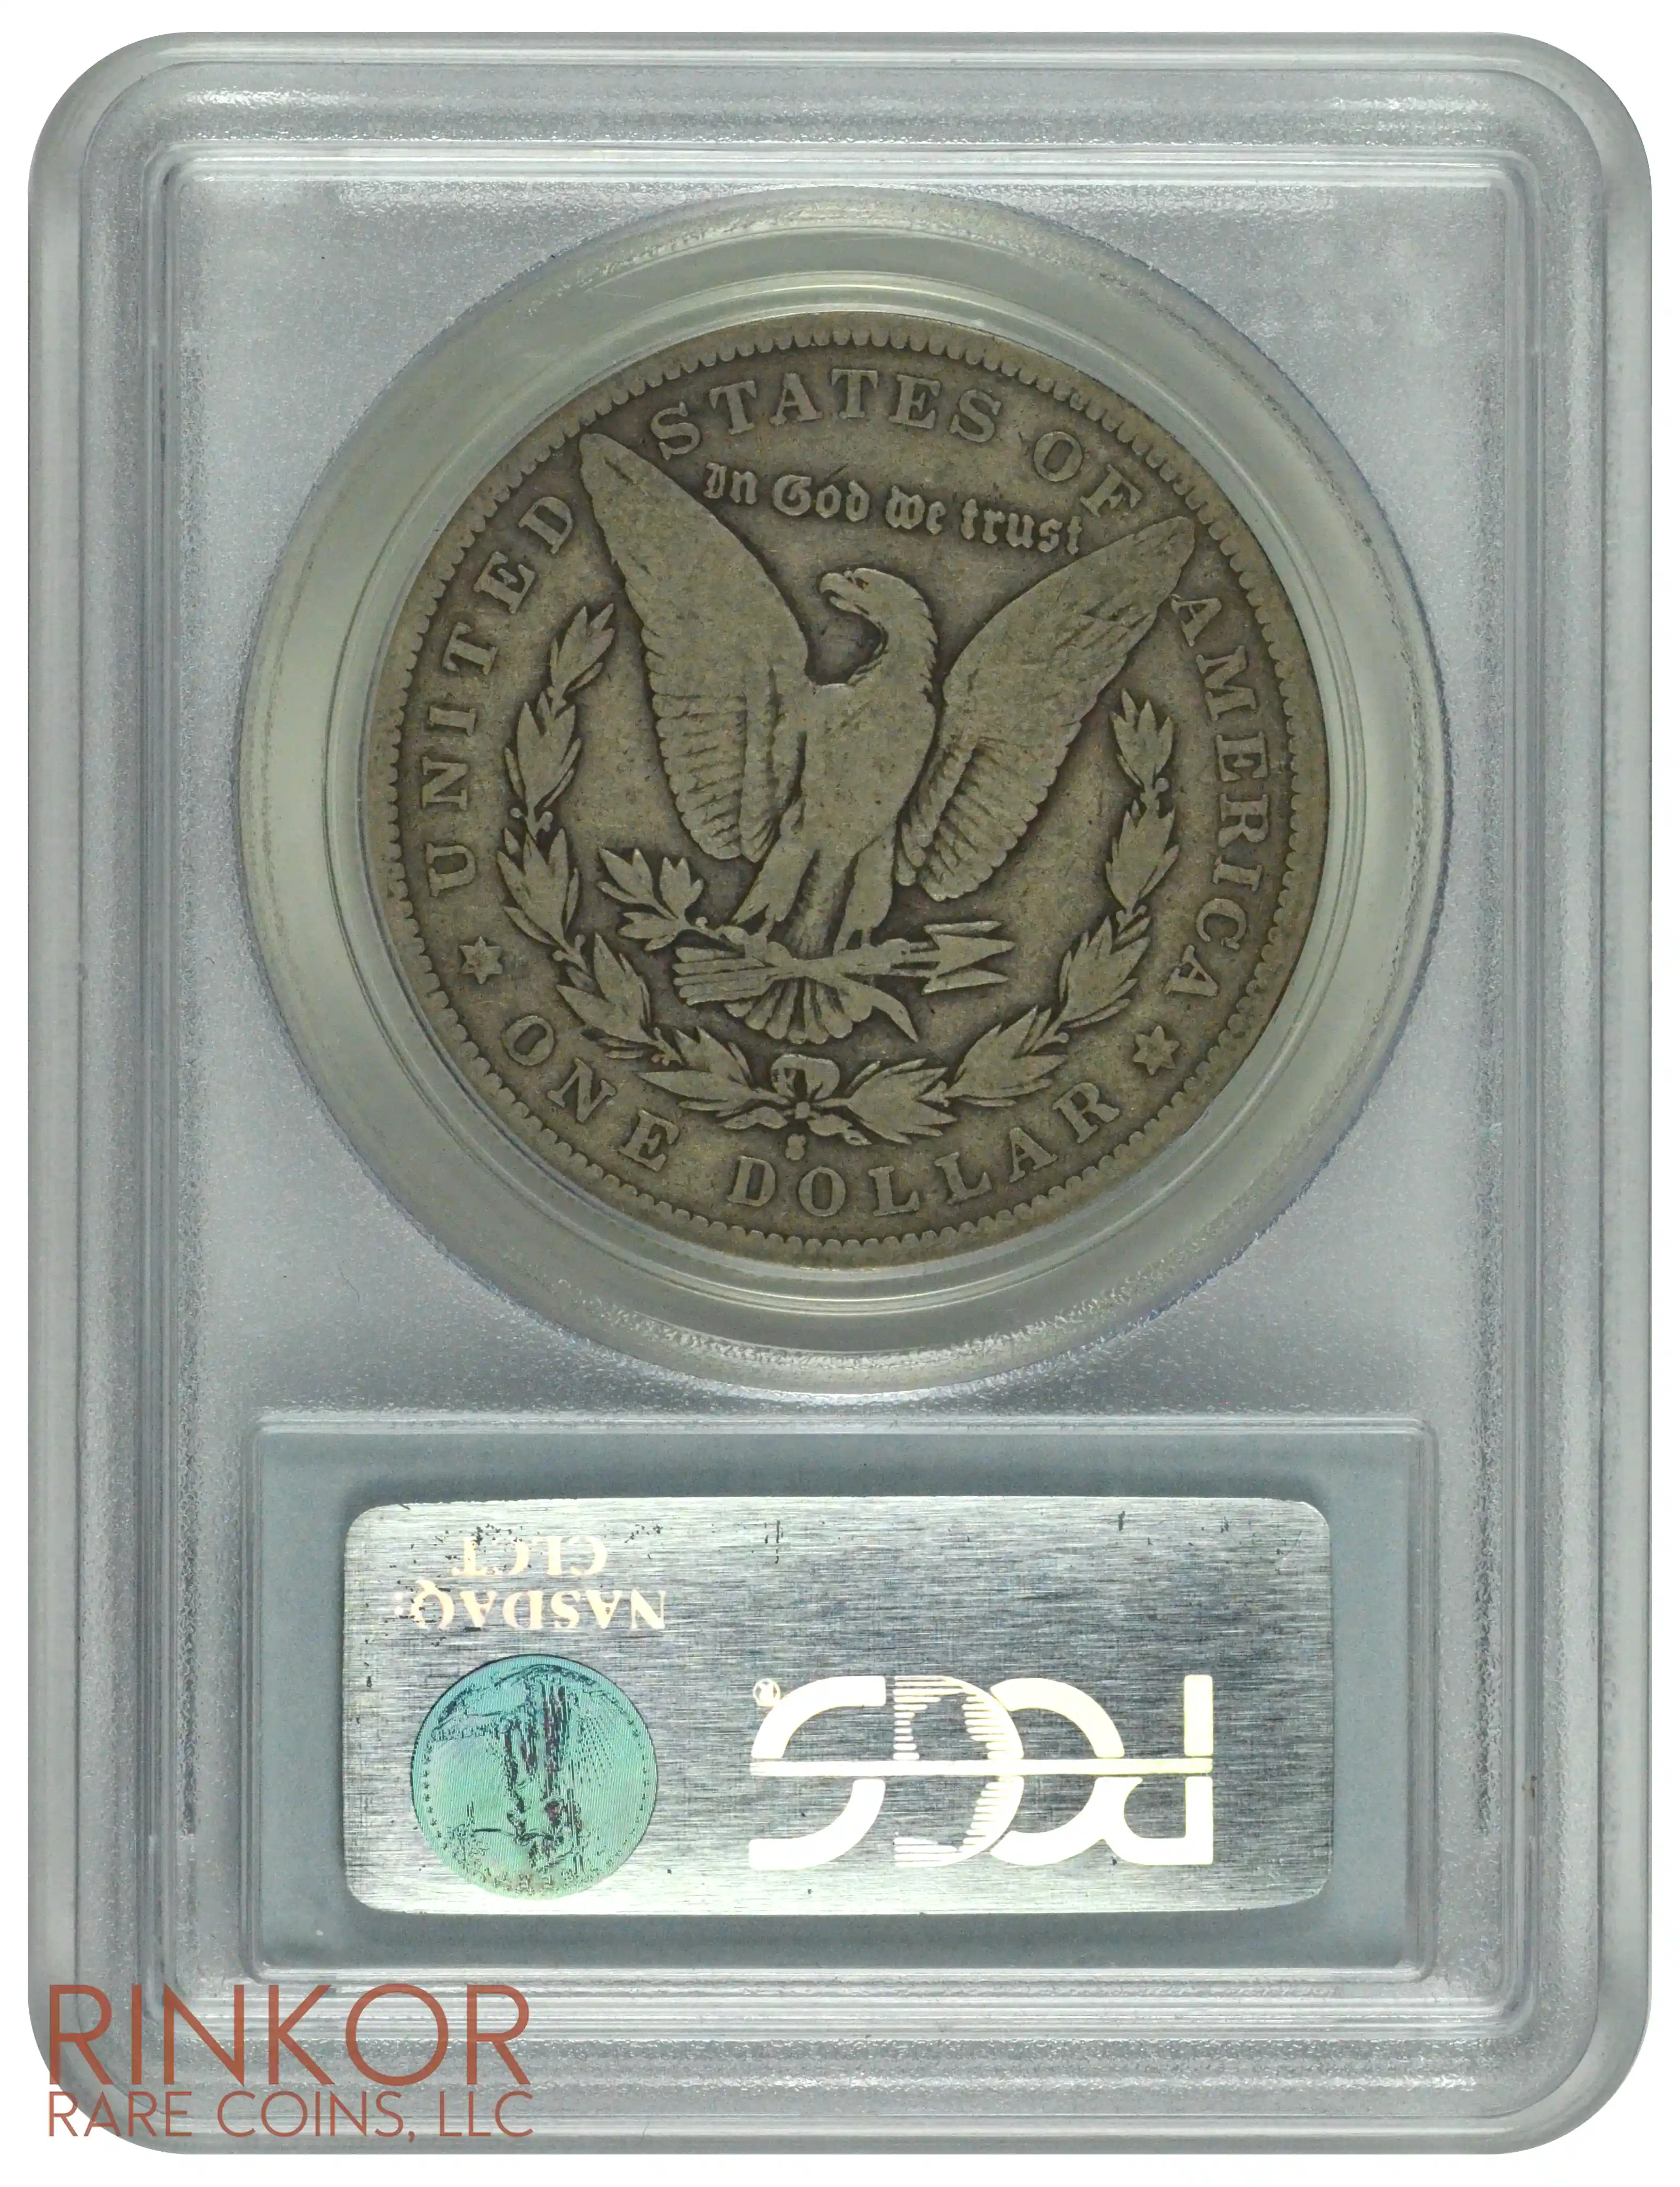 1893-S $1 PCGS G-06 CAC